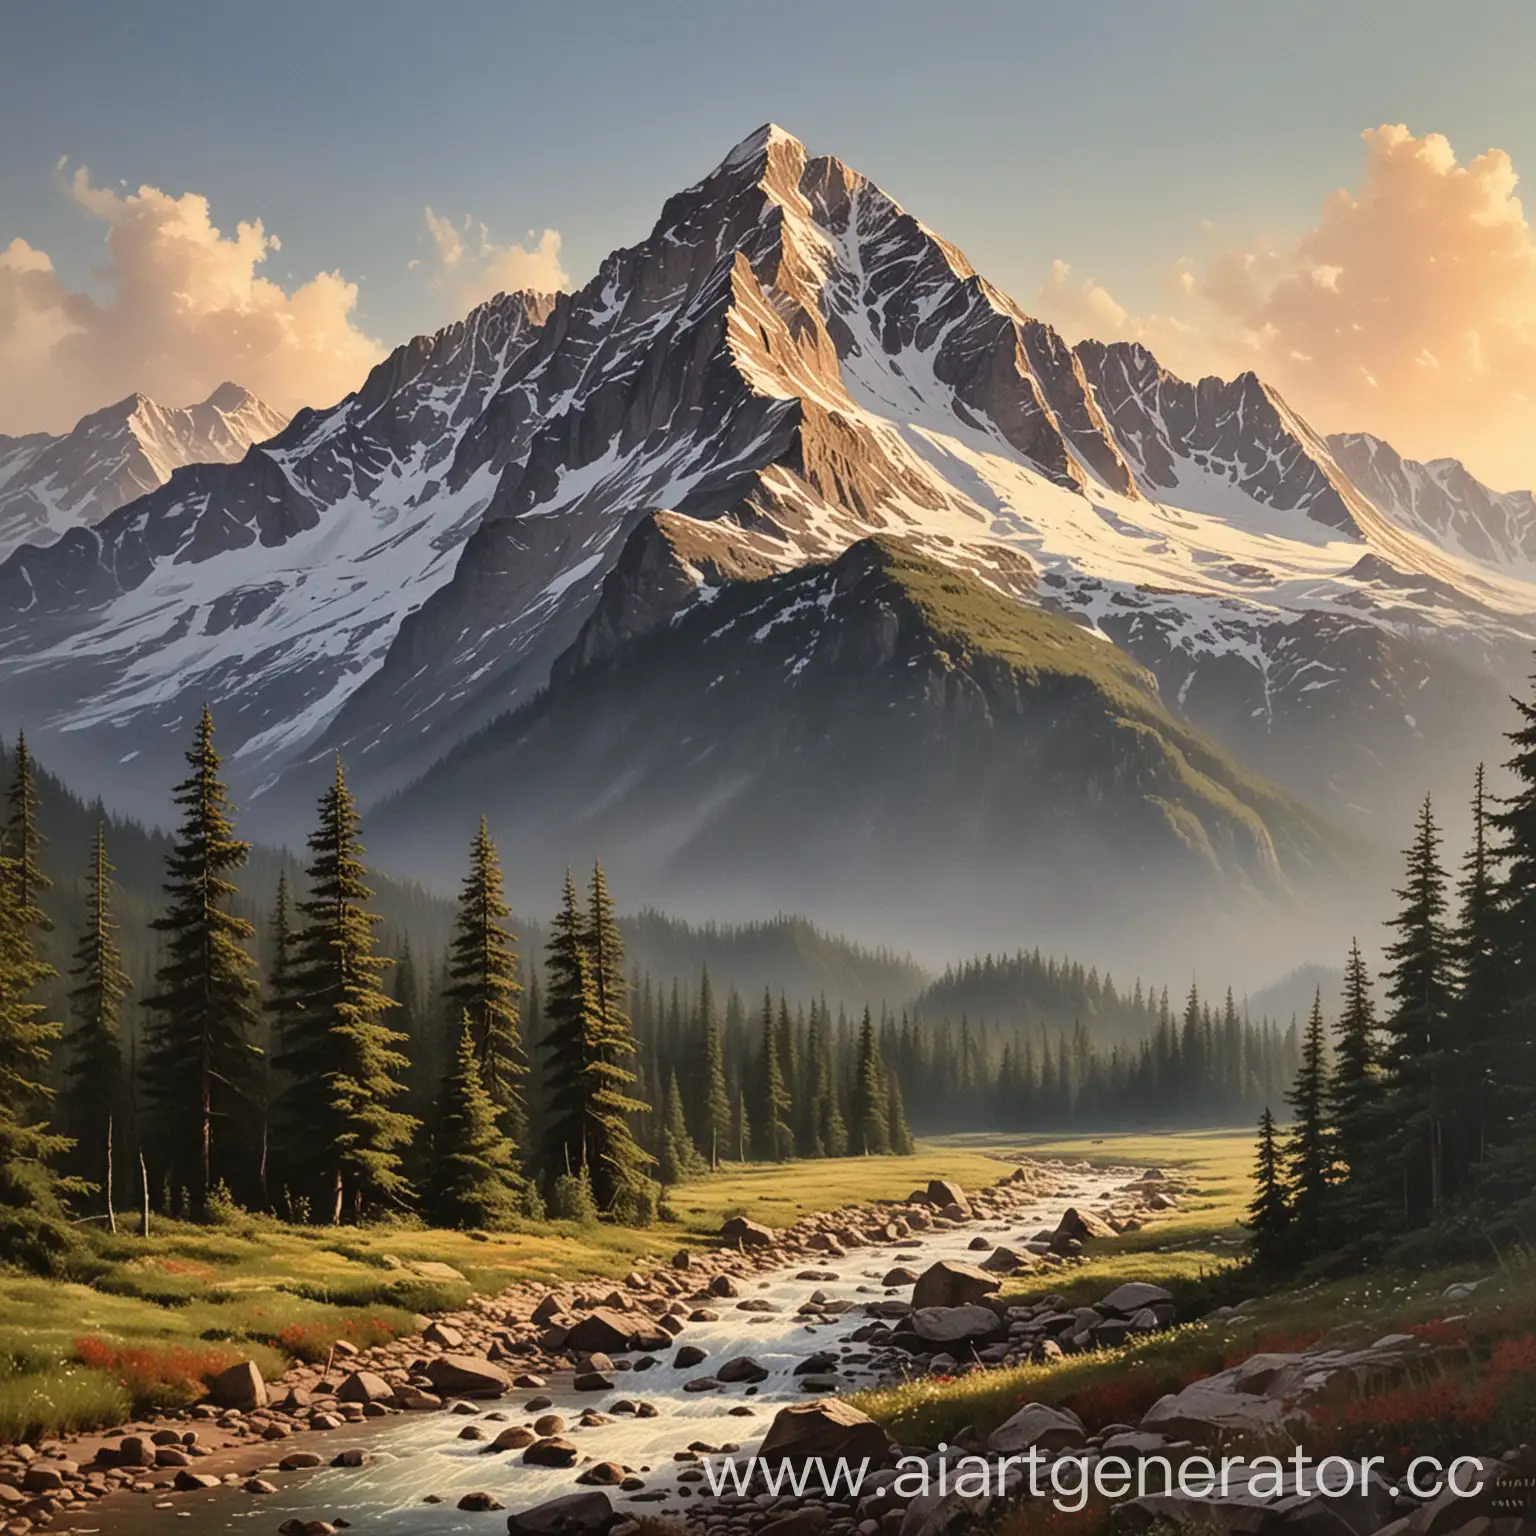 Scenic-Landscape-Painting-of-Majestic-Mountain-Range